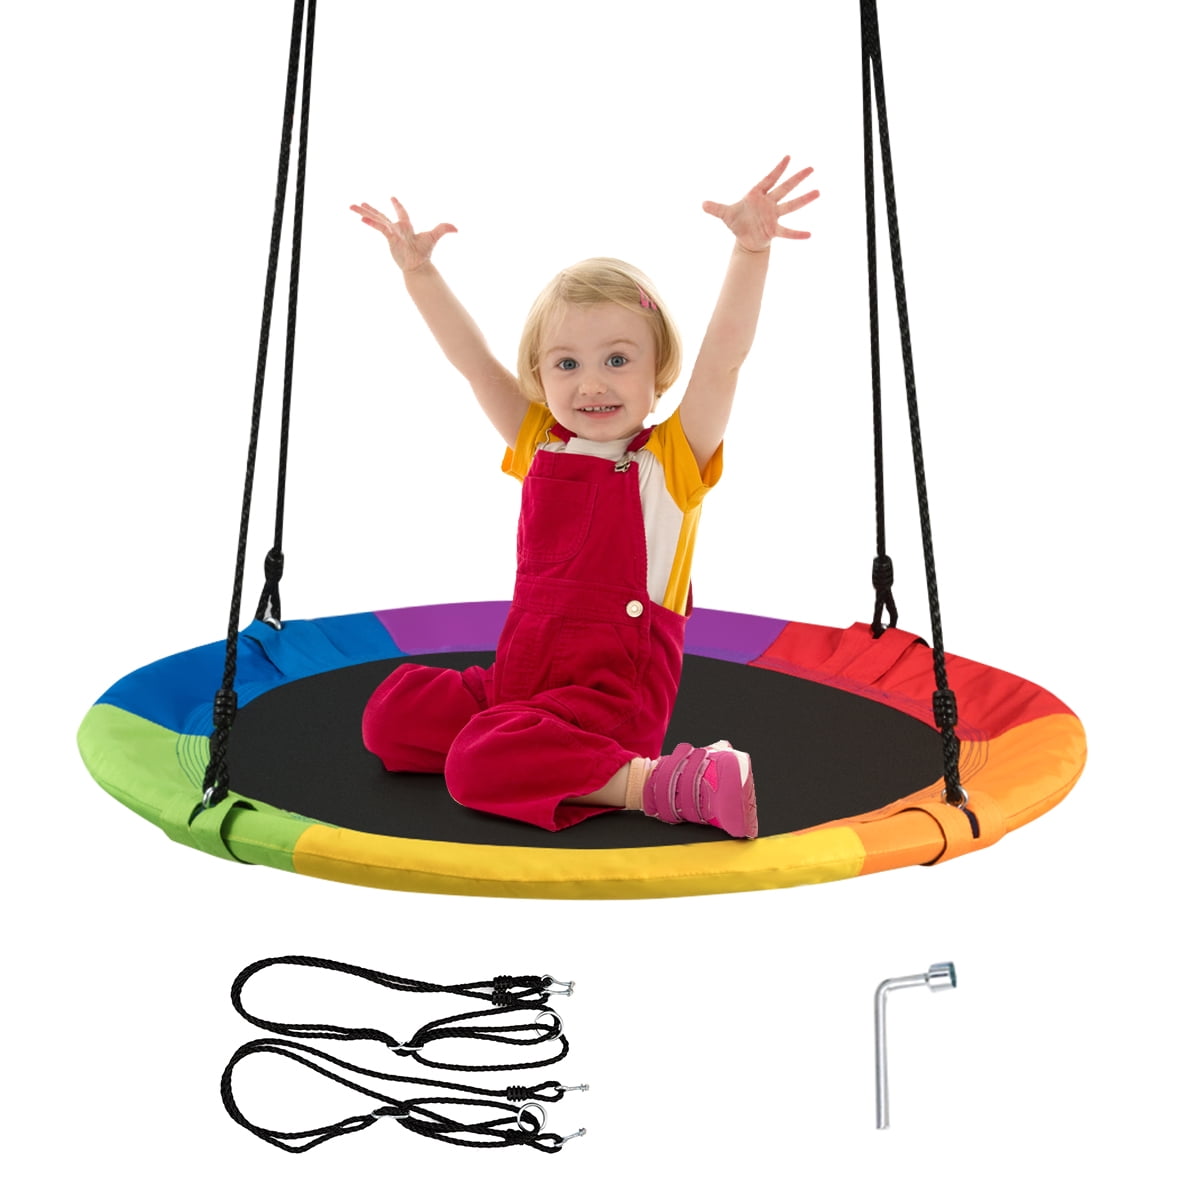 40" Kids Adults Indoor/ Garden Tree Swing Round Saucer Swing Seat Outdoor Toy 